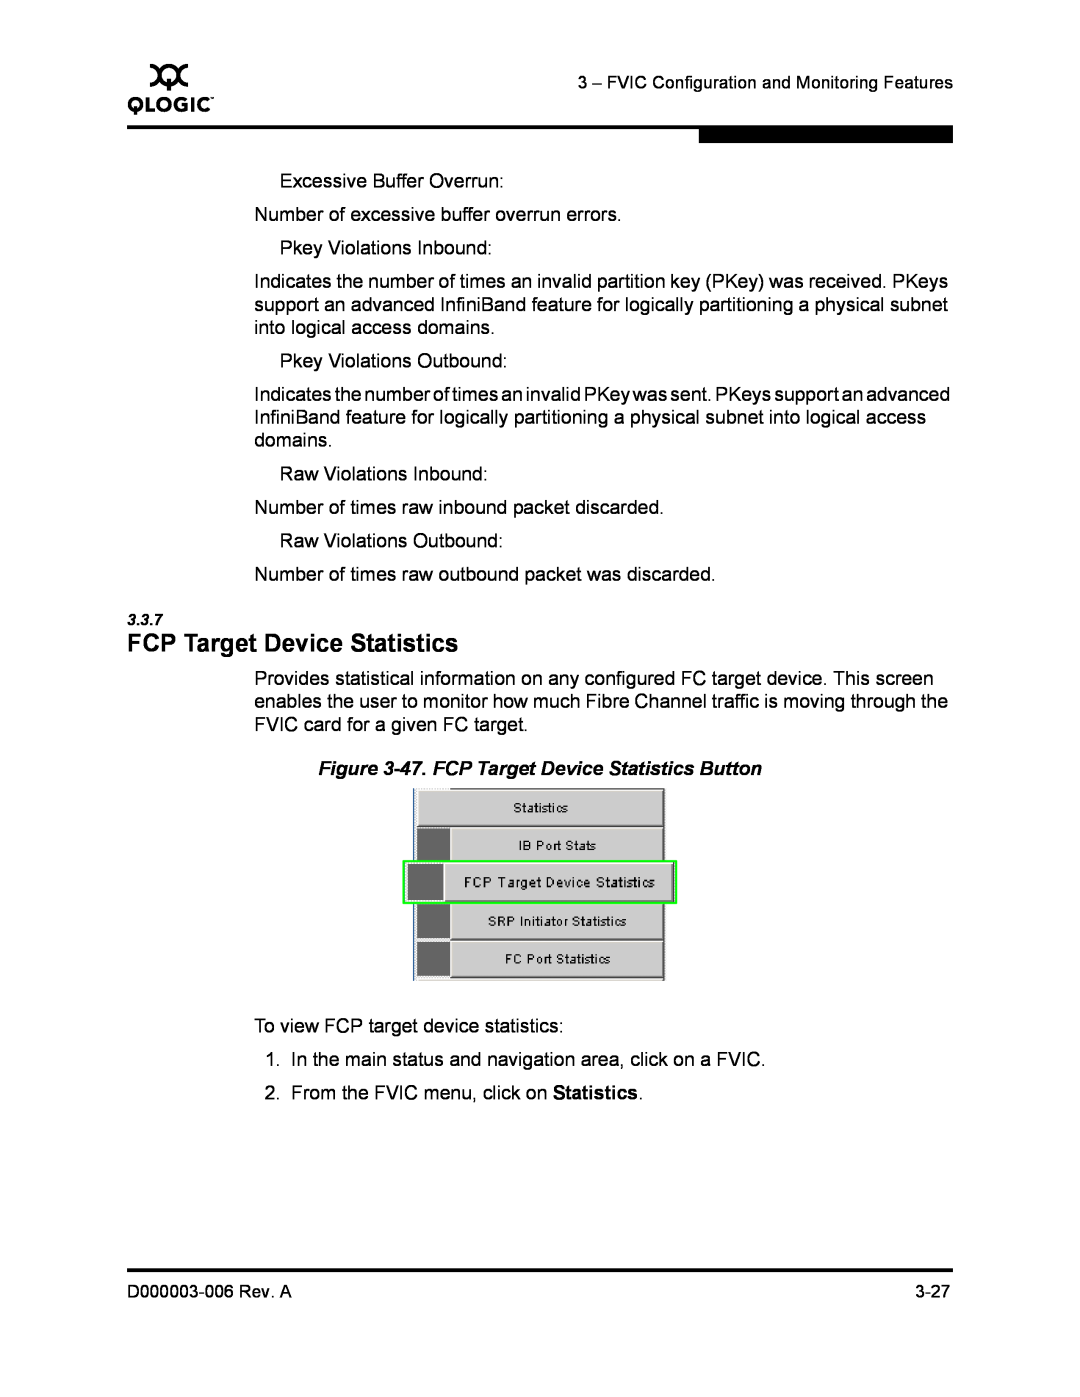 Q-Logic 9000 manual 47. FCP Target Device Statistics Button 